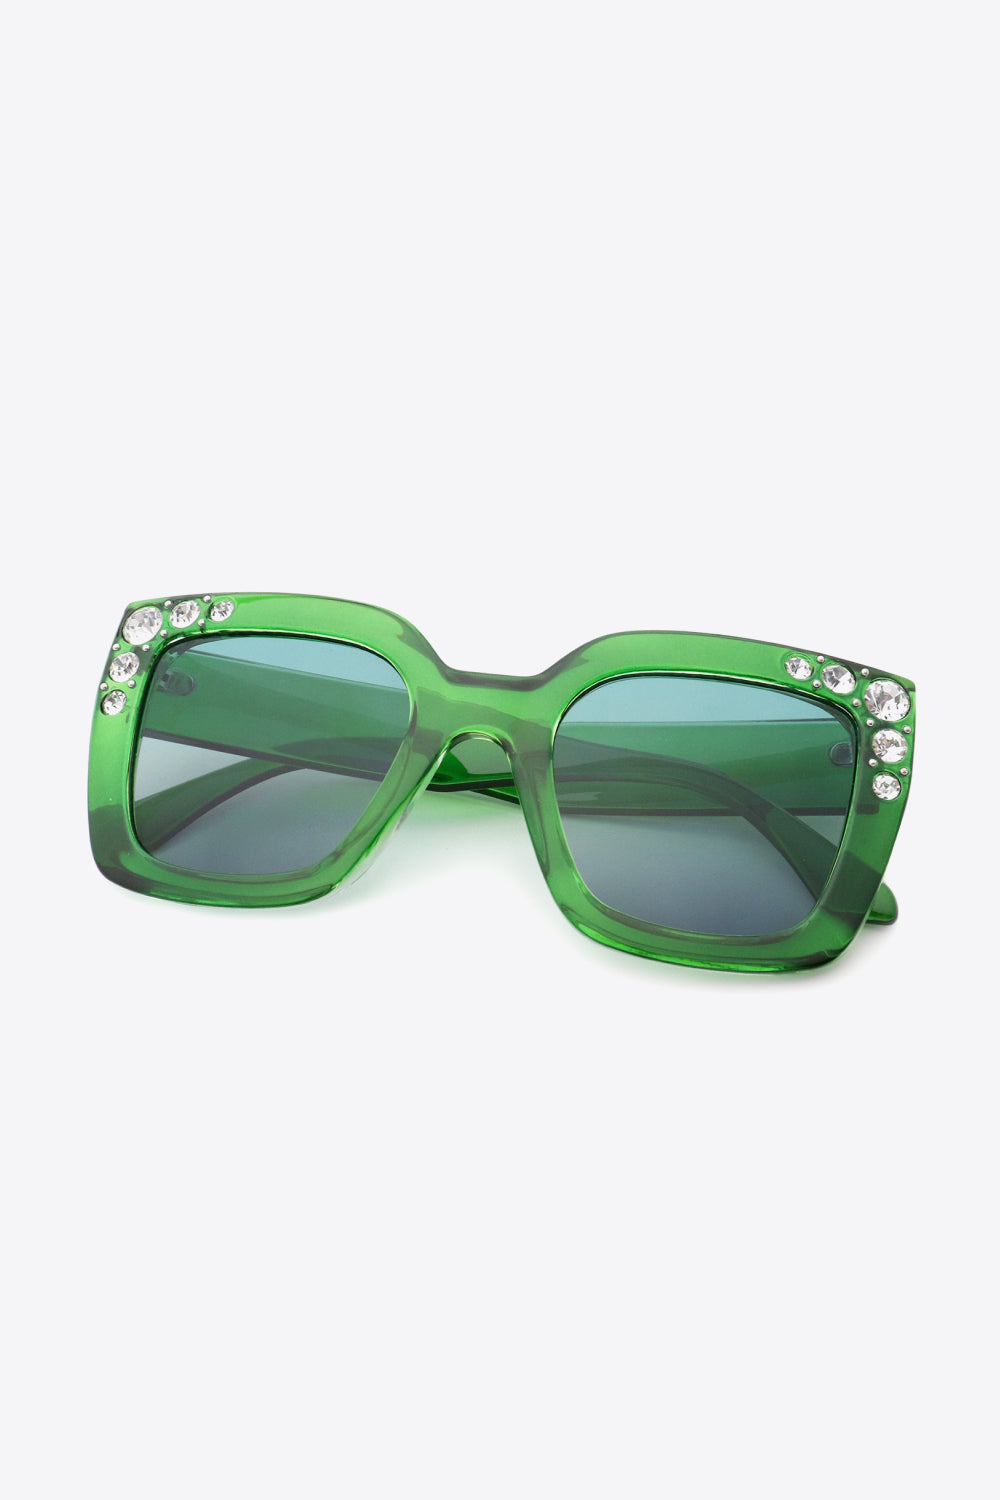 Inlaid Rhinestone Polycarbonate Sunglasses Green One Size